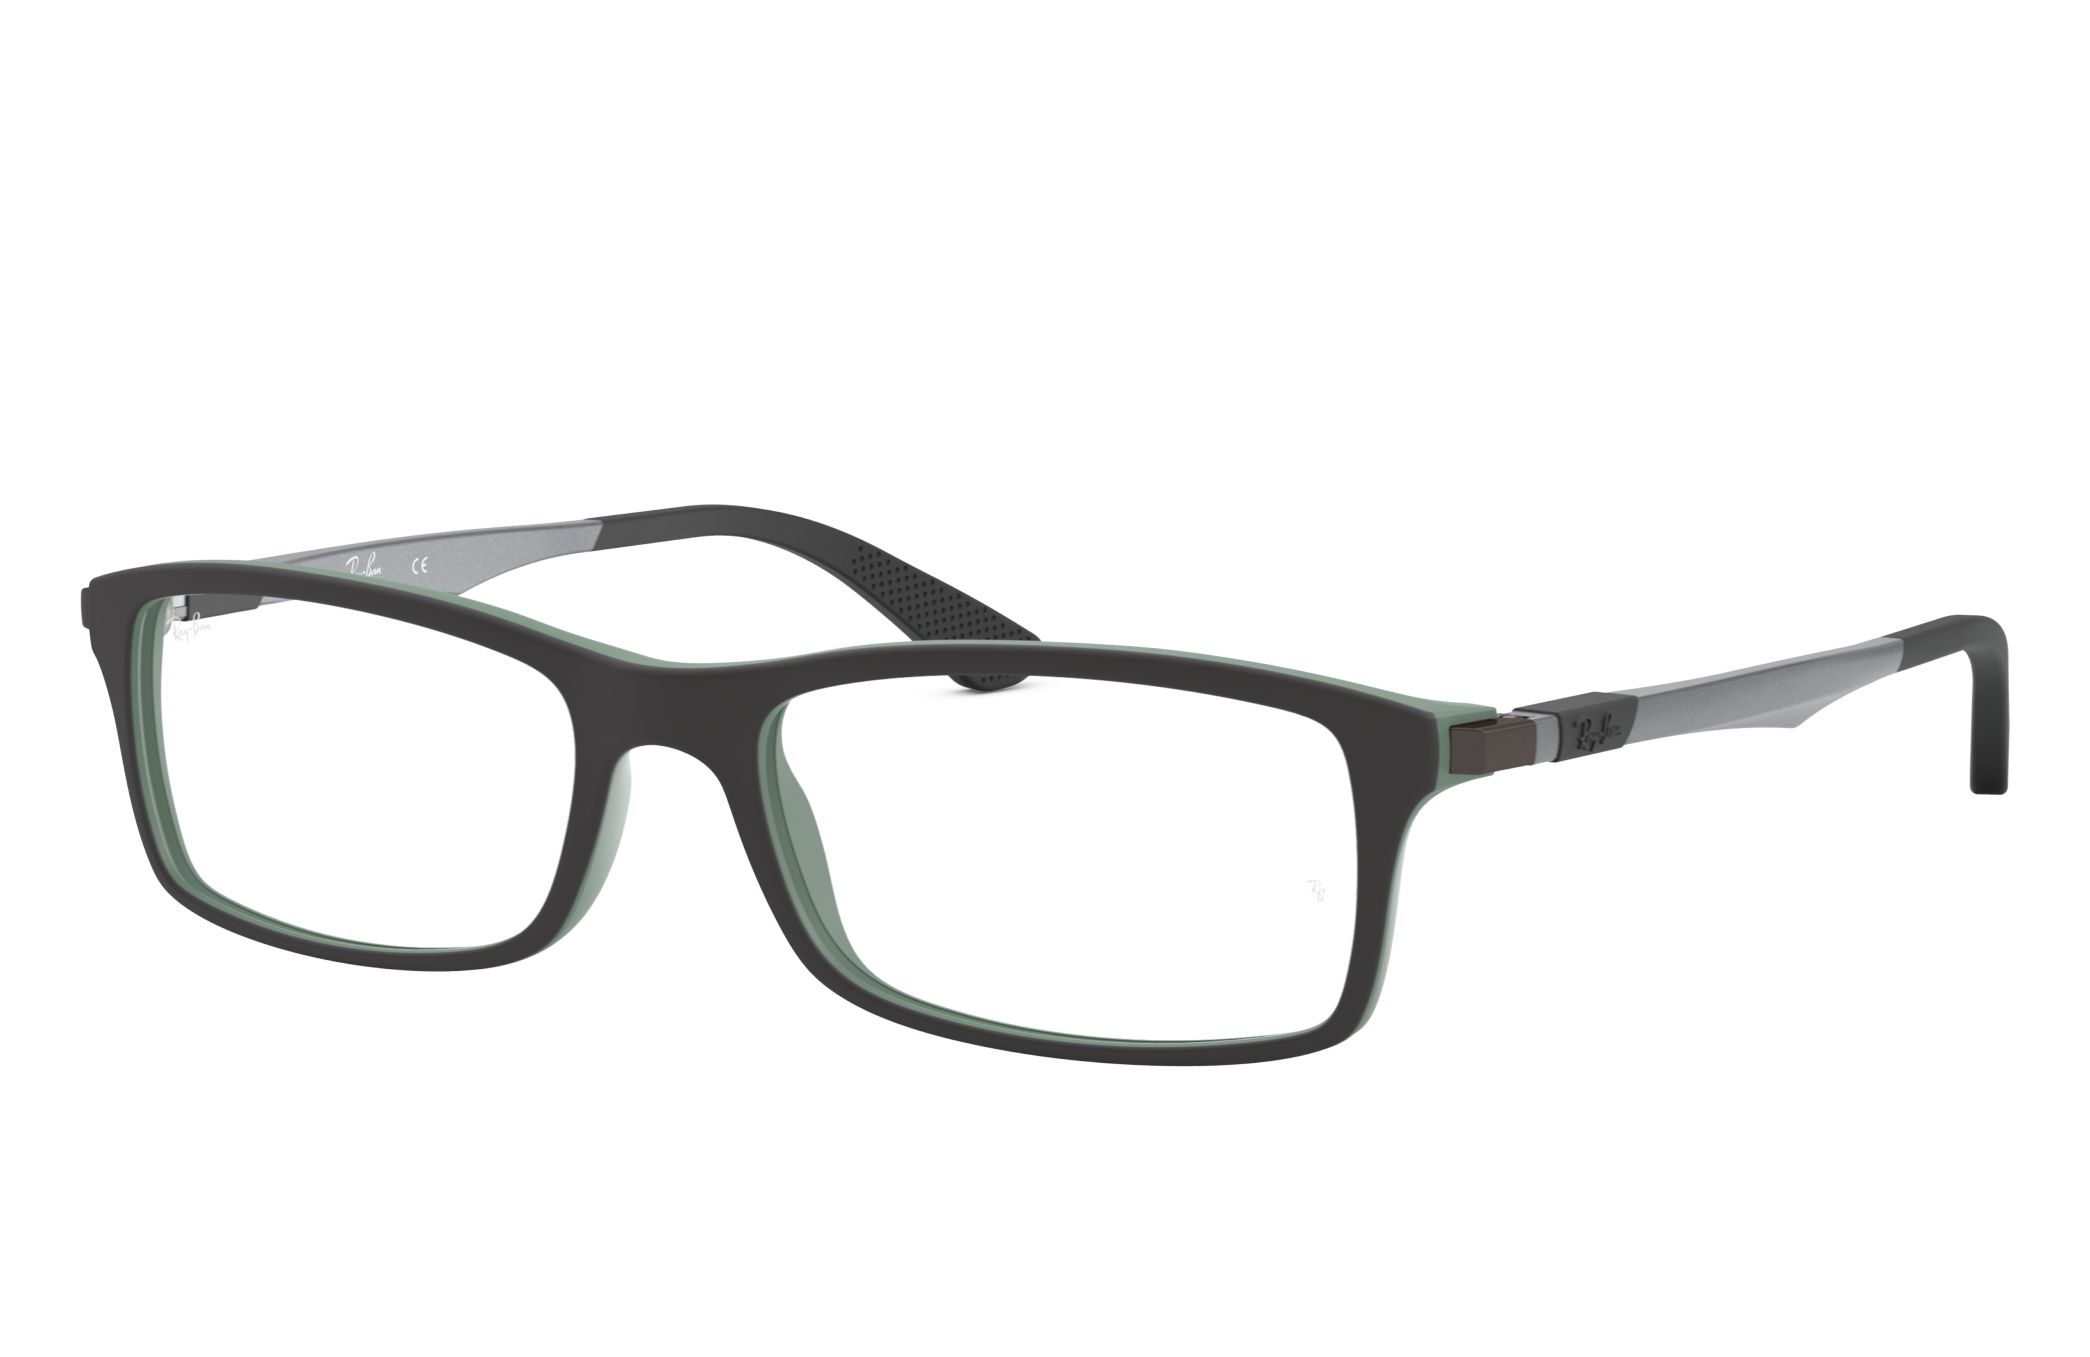 Rb7017 Optics Eyeglasses with Black On Green Frame | Ray-Ban®